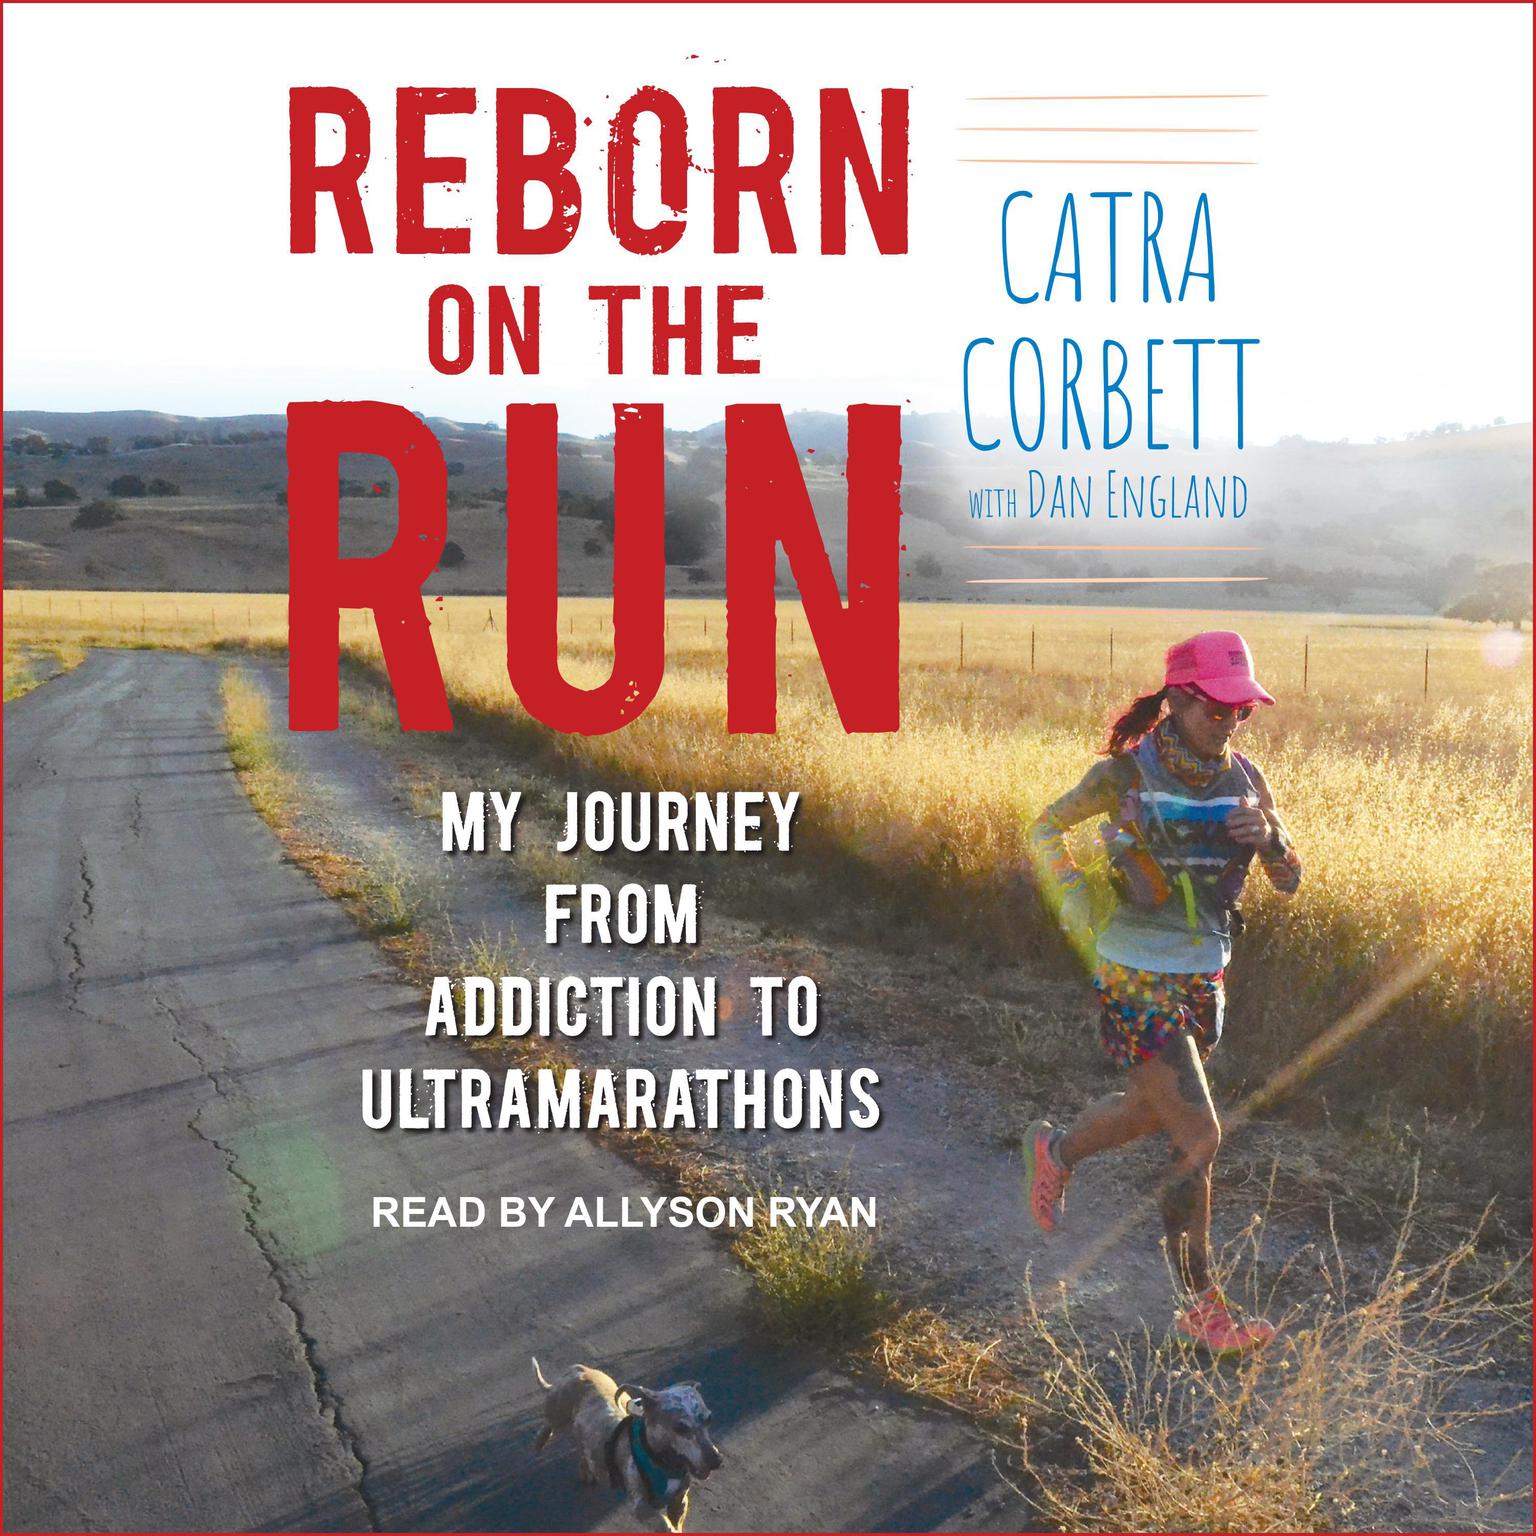 Reborn on the Run: My Journey from Addiction to Ultramarathons Audiobook, by Catra Corbett